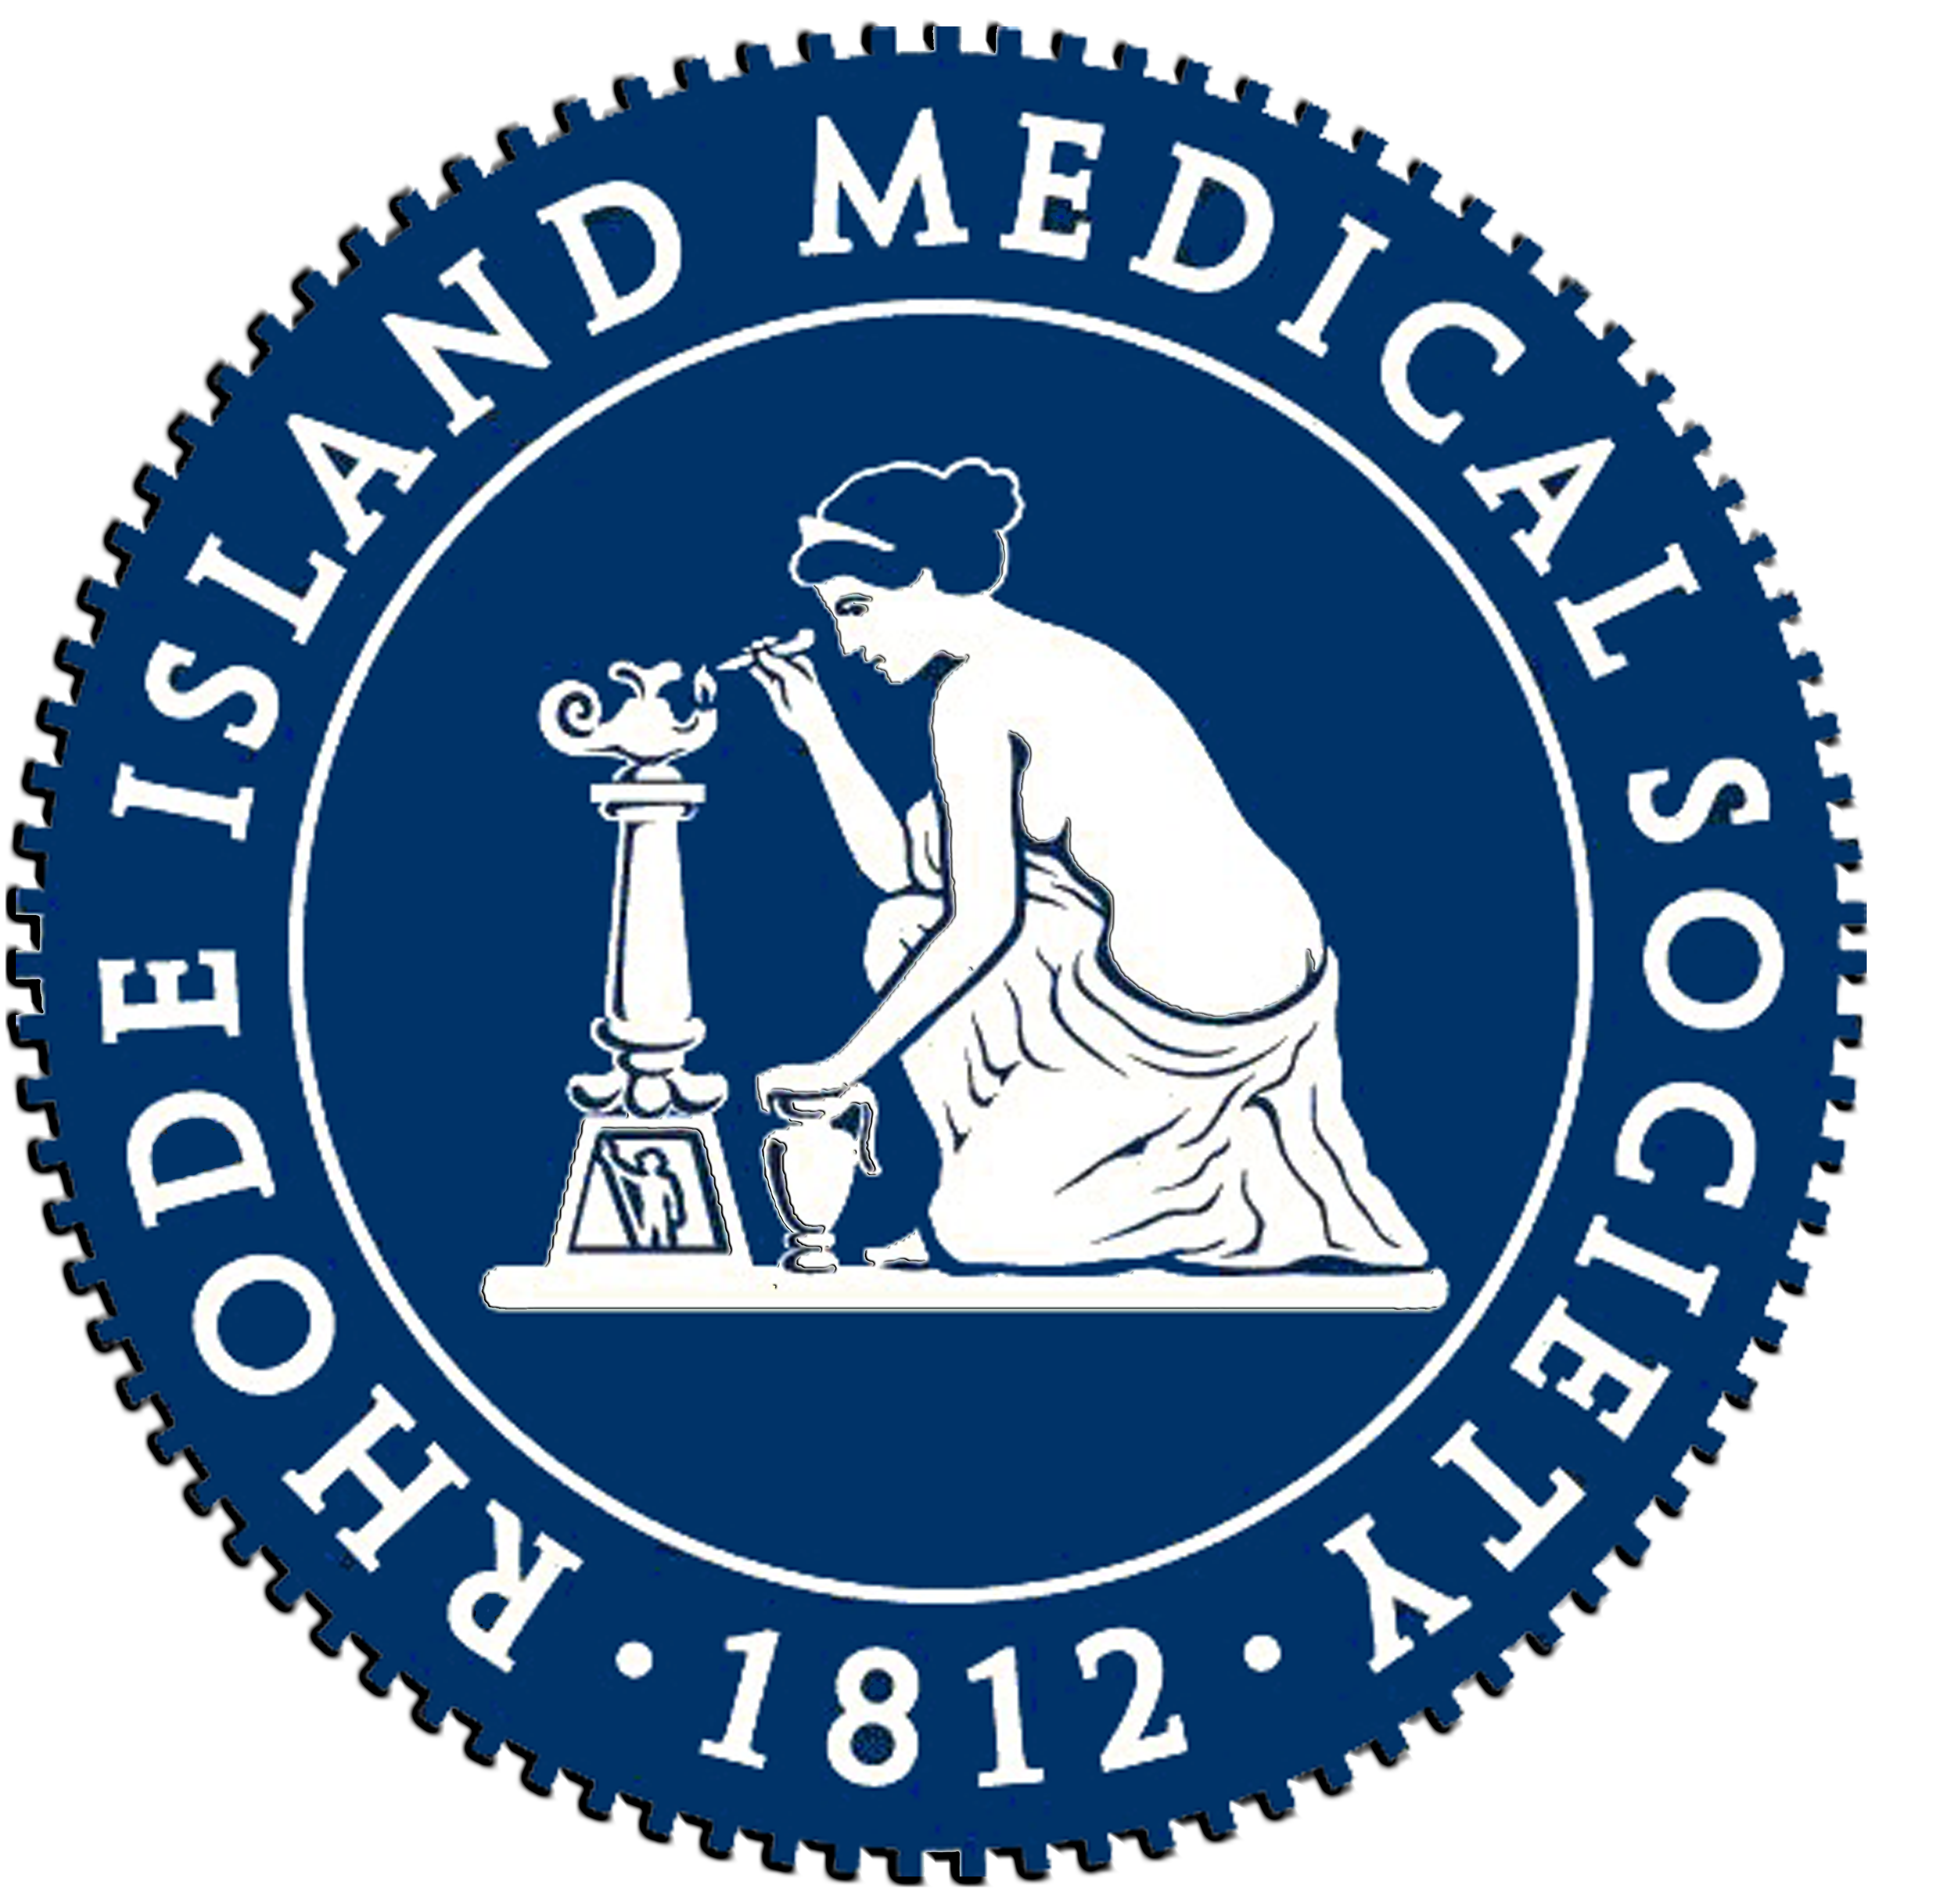 Rhode Island Medical Society